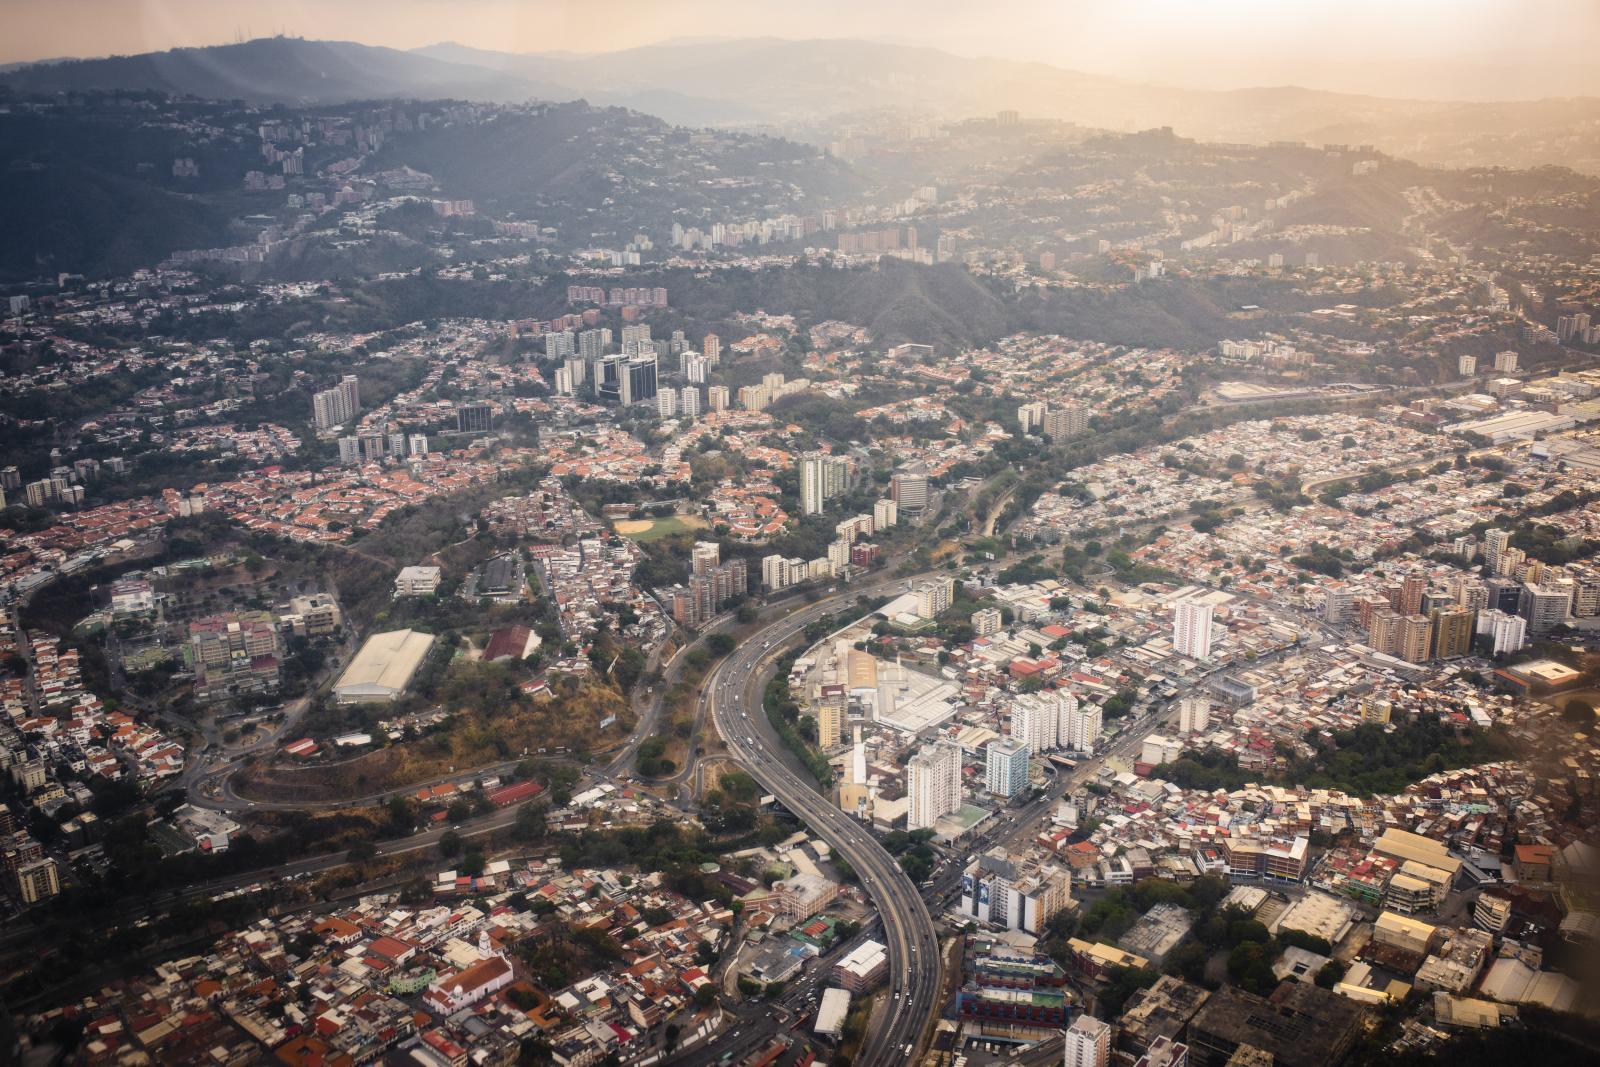 Aerial view of the city of Caracas, Venezuela. March 6, 2019.